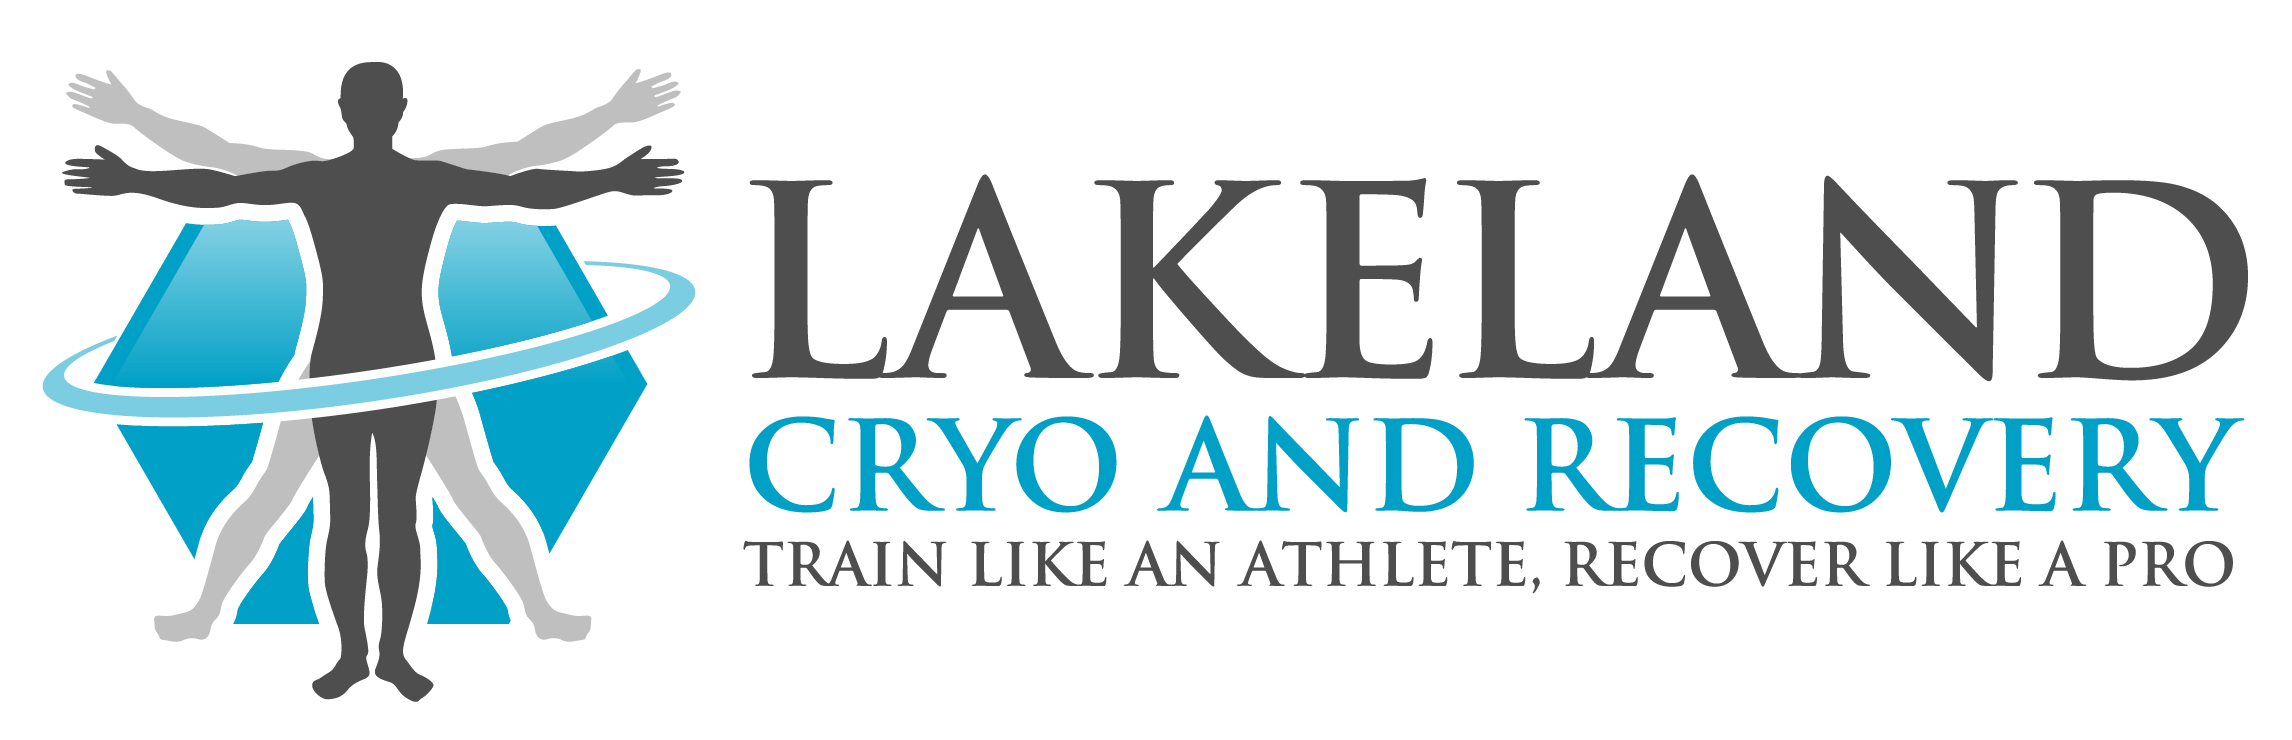 Lakeland Cryo and Recovery